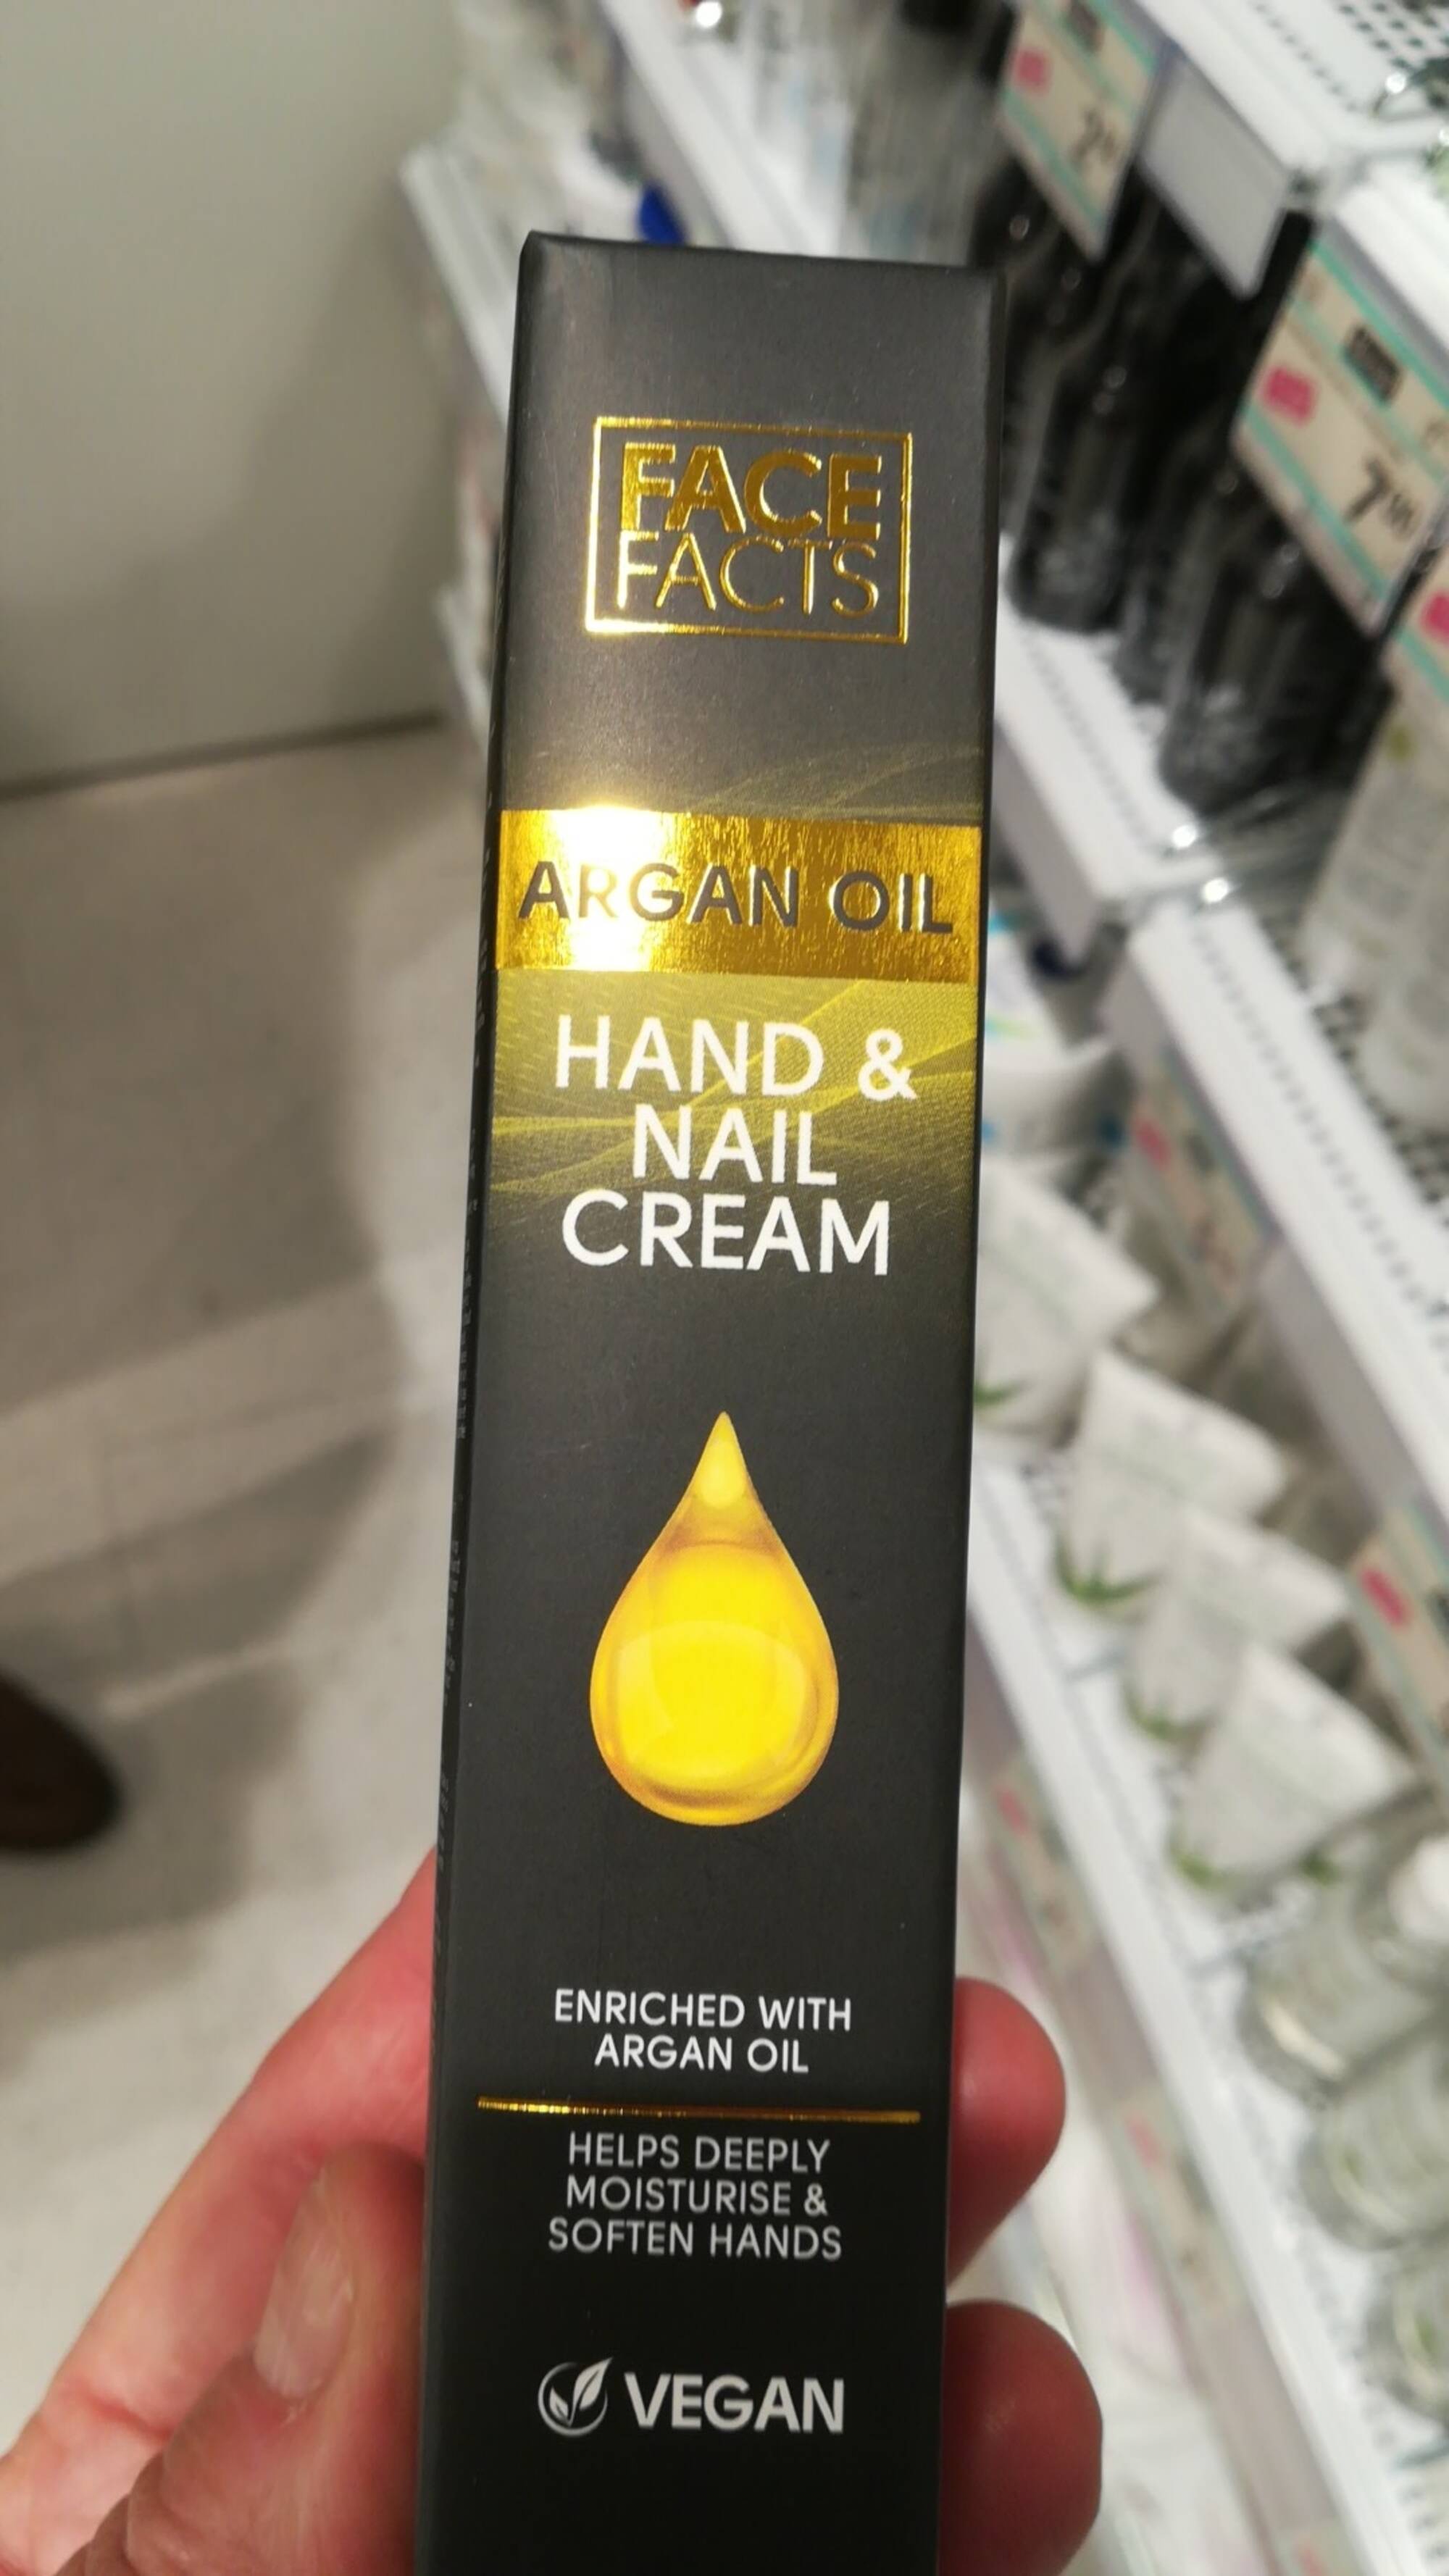 FACE FACTS - Argan oil - Hand & nail cream